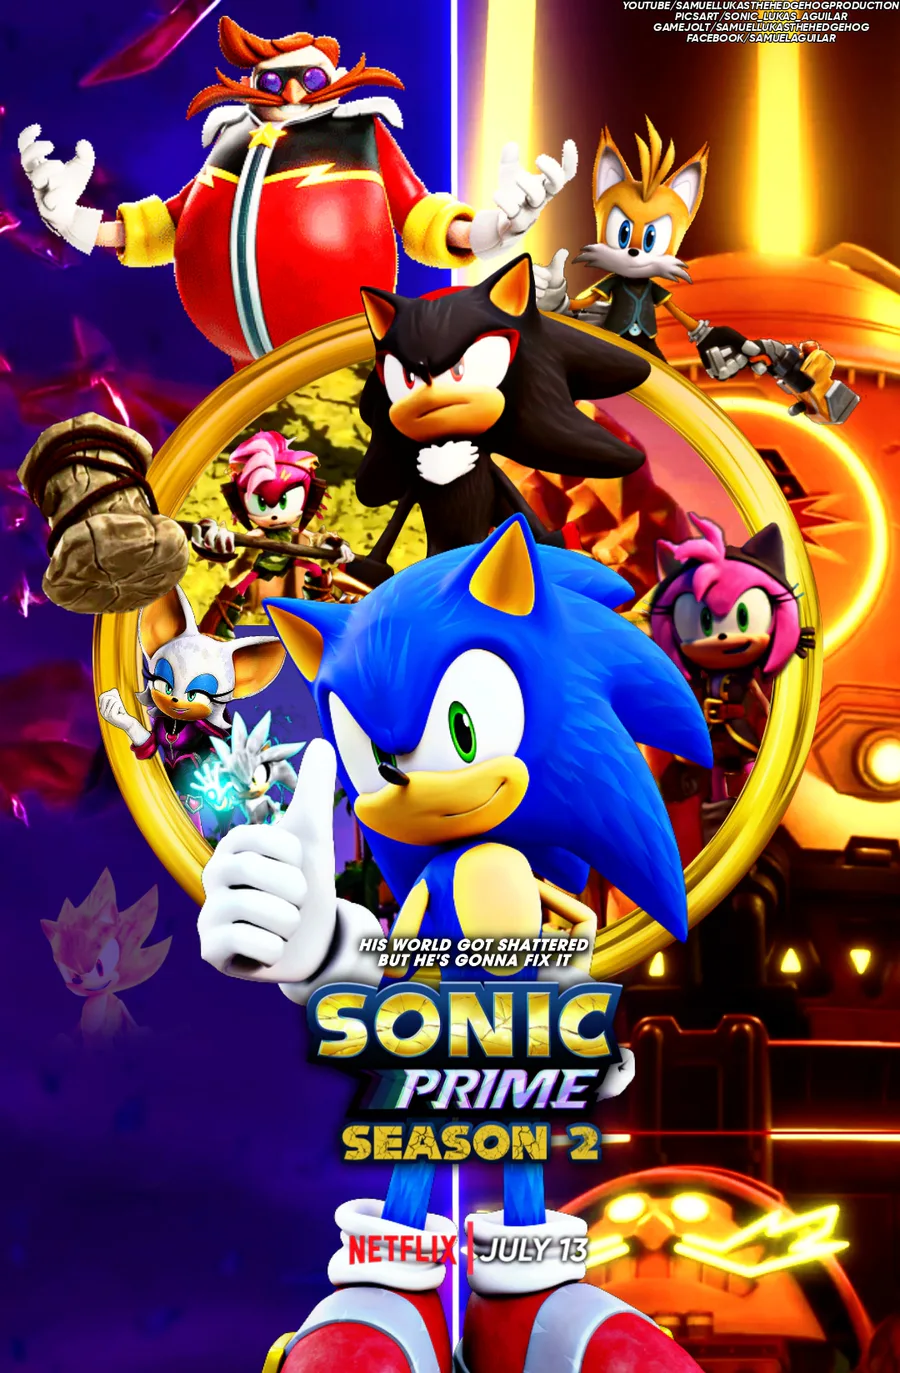 Samuel Lukas The Hedgehog on Game Jolt: Sonic Prime Season 2 Poster 6